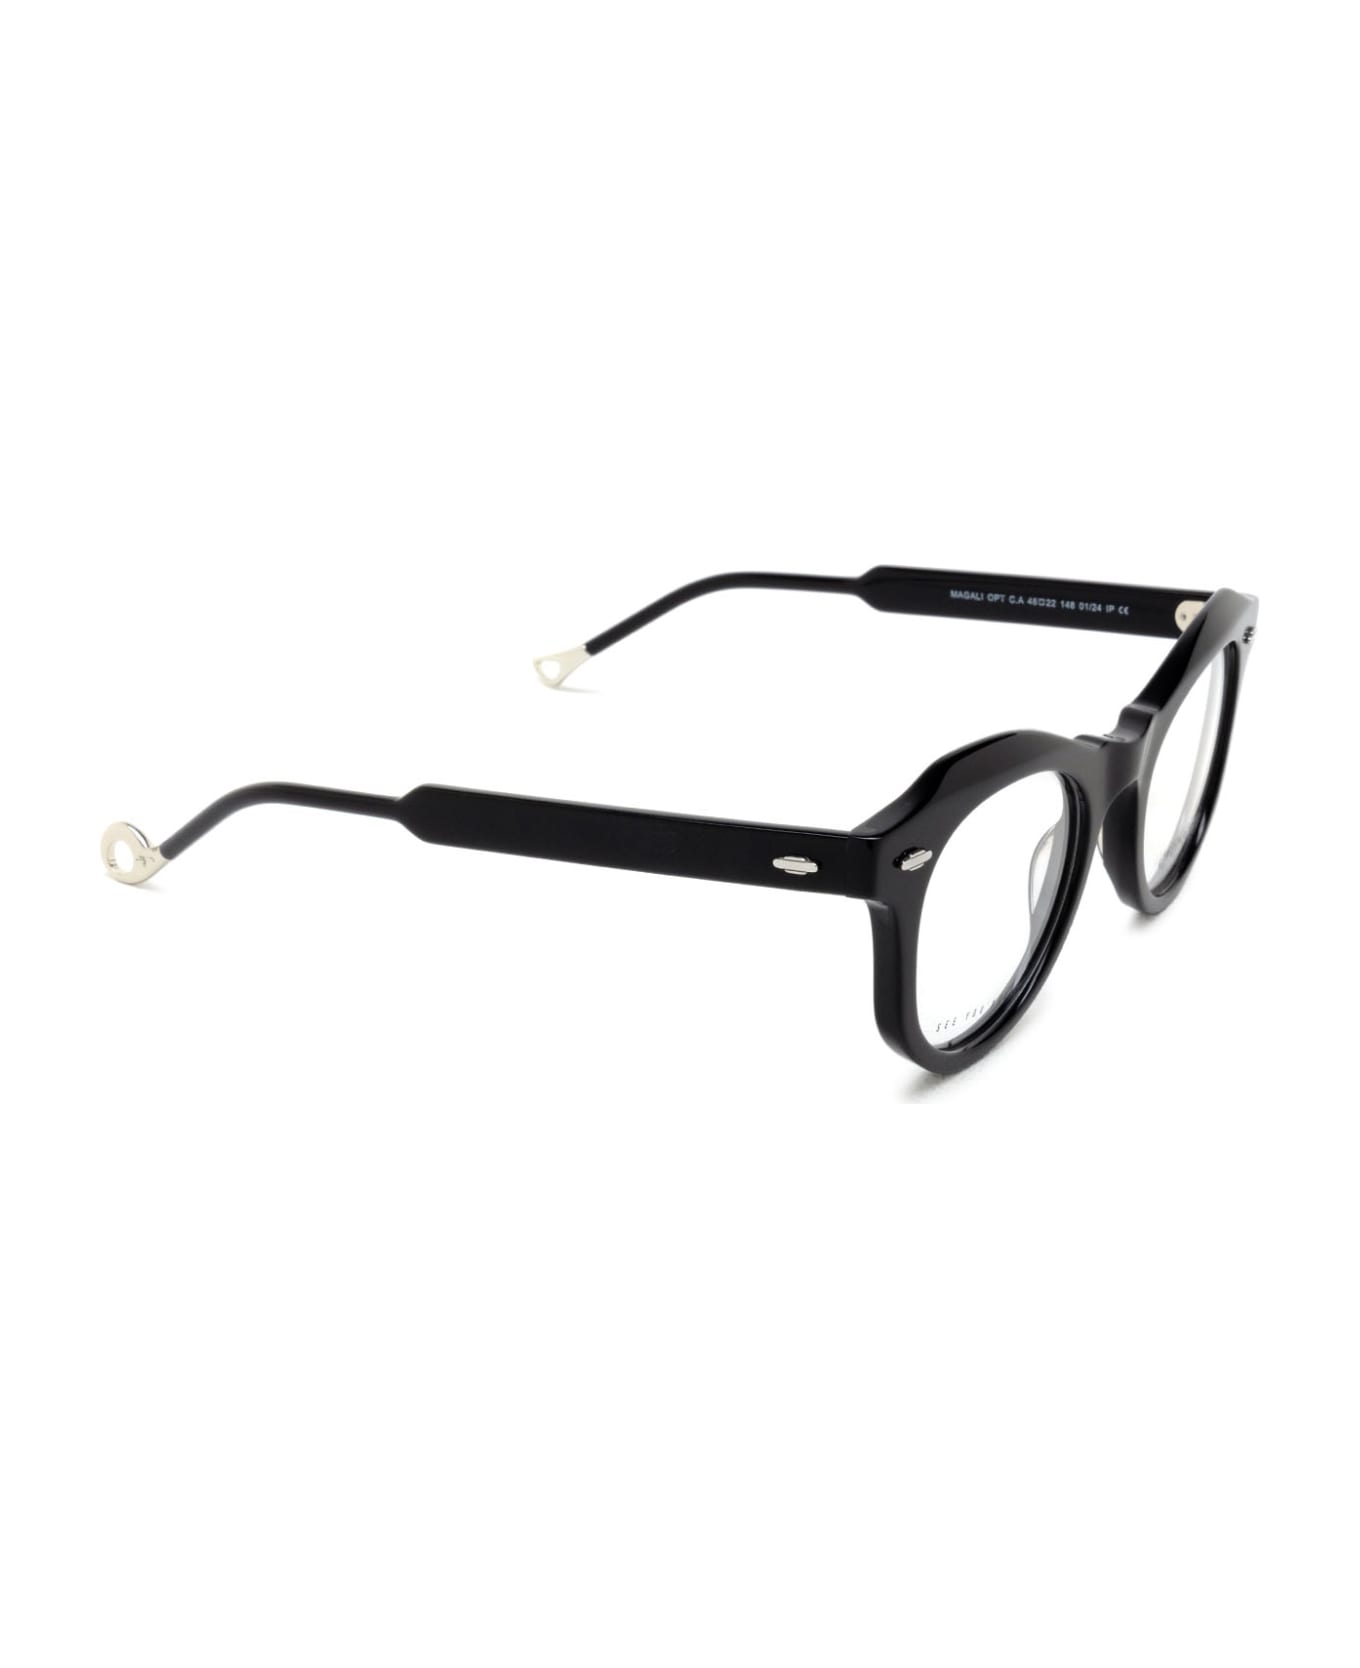 Eyepetizer Magali Opt Black Glasses - Black